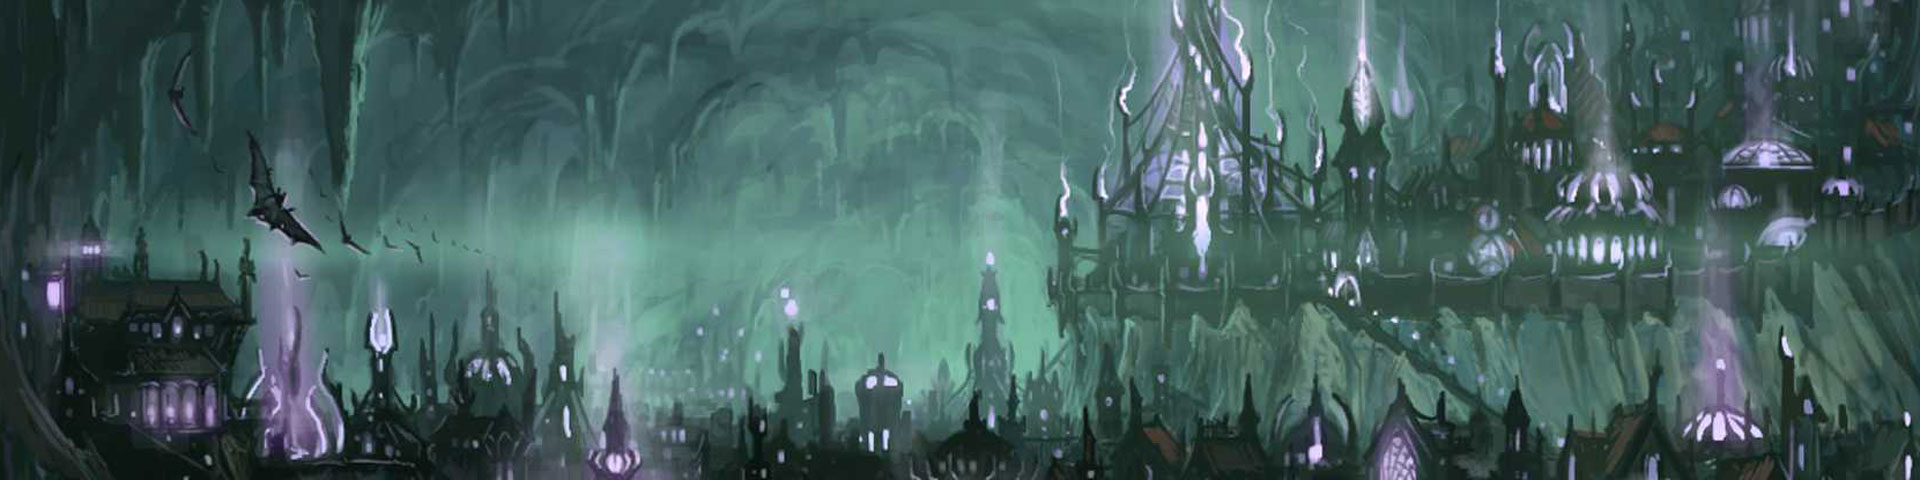 A massive underground city -- its towers illuminated purple -- fills a blue-green cavern.